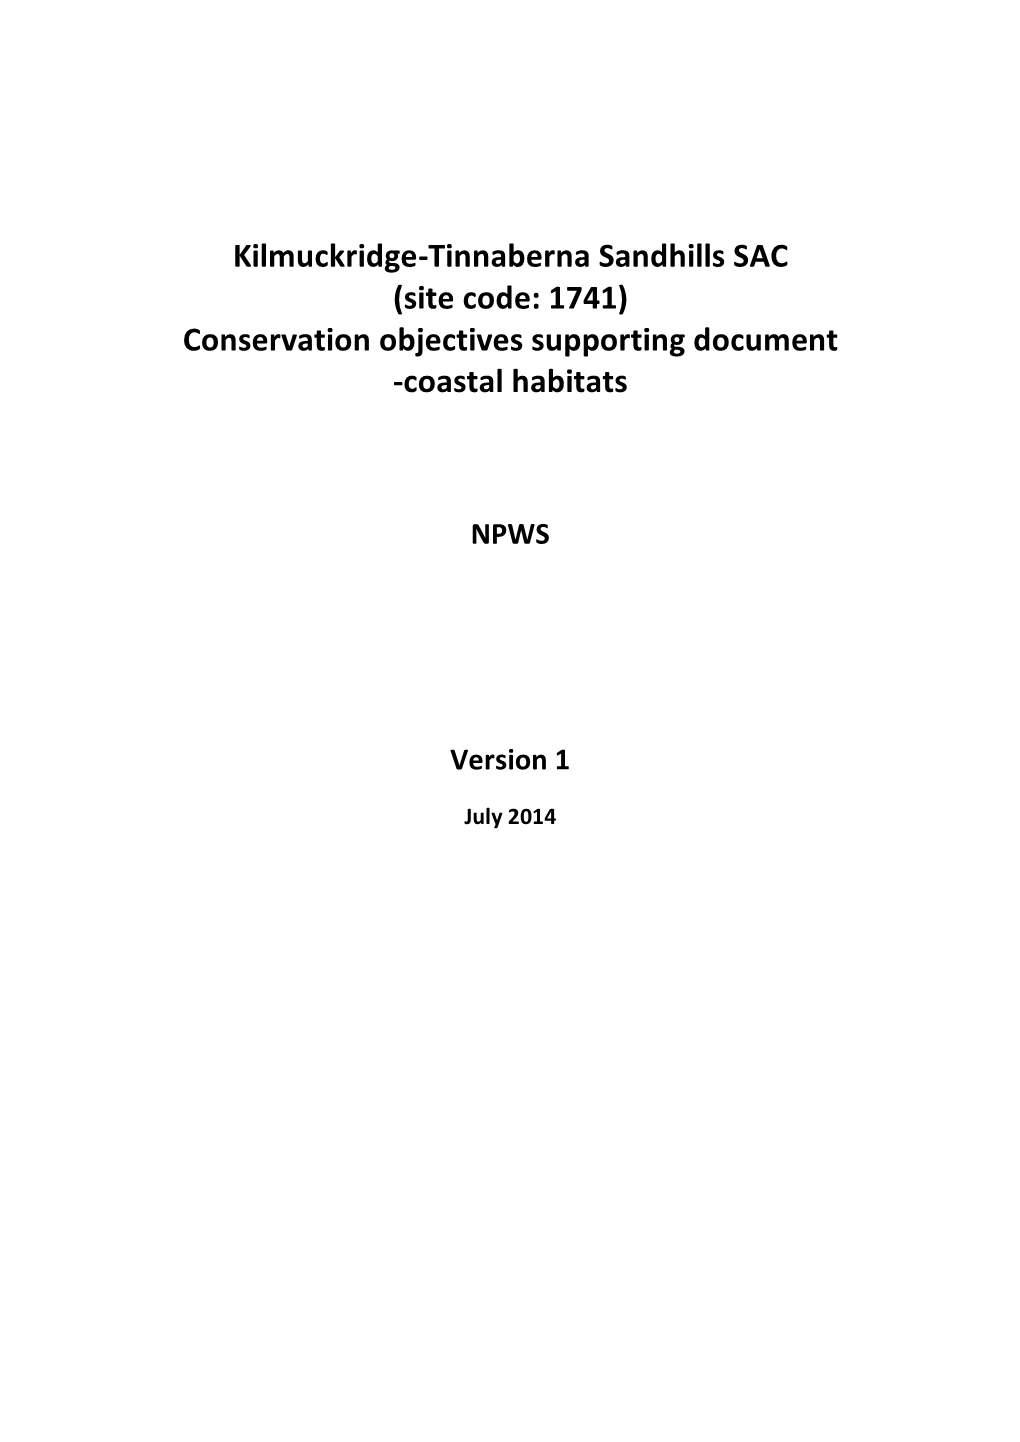 Kilmuckridge-Tinnaberna Sandhills SAC (Site Code: 1741) Conservation Objectives Supporting Document -Coastal Habitats